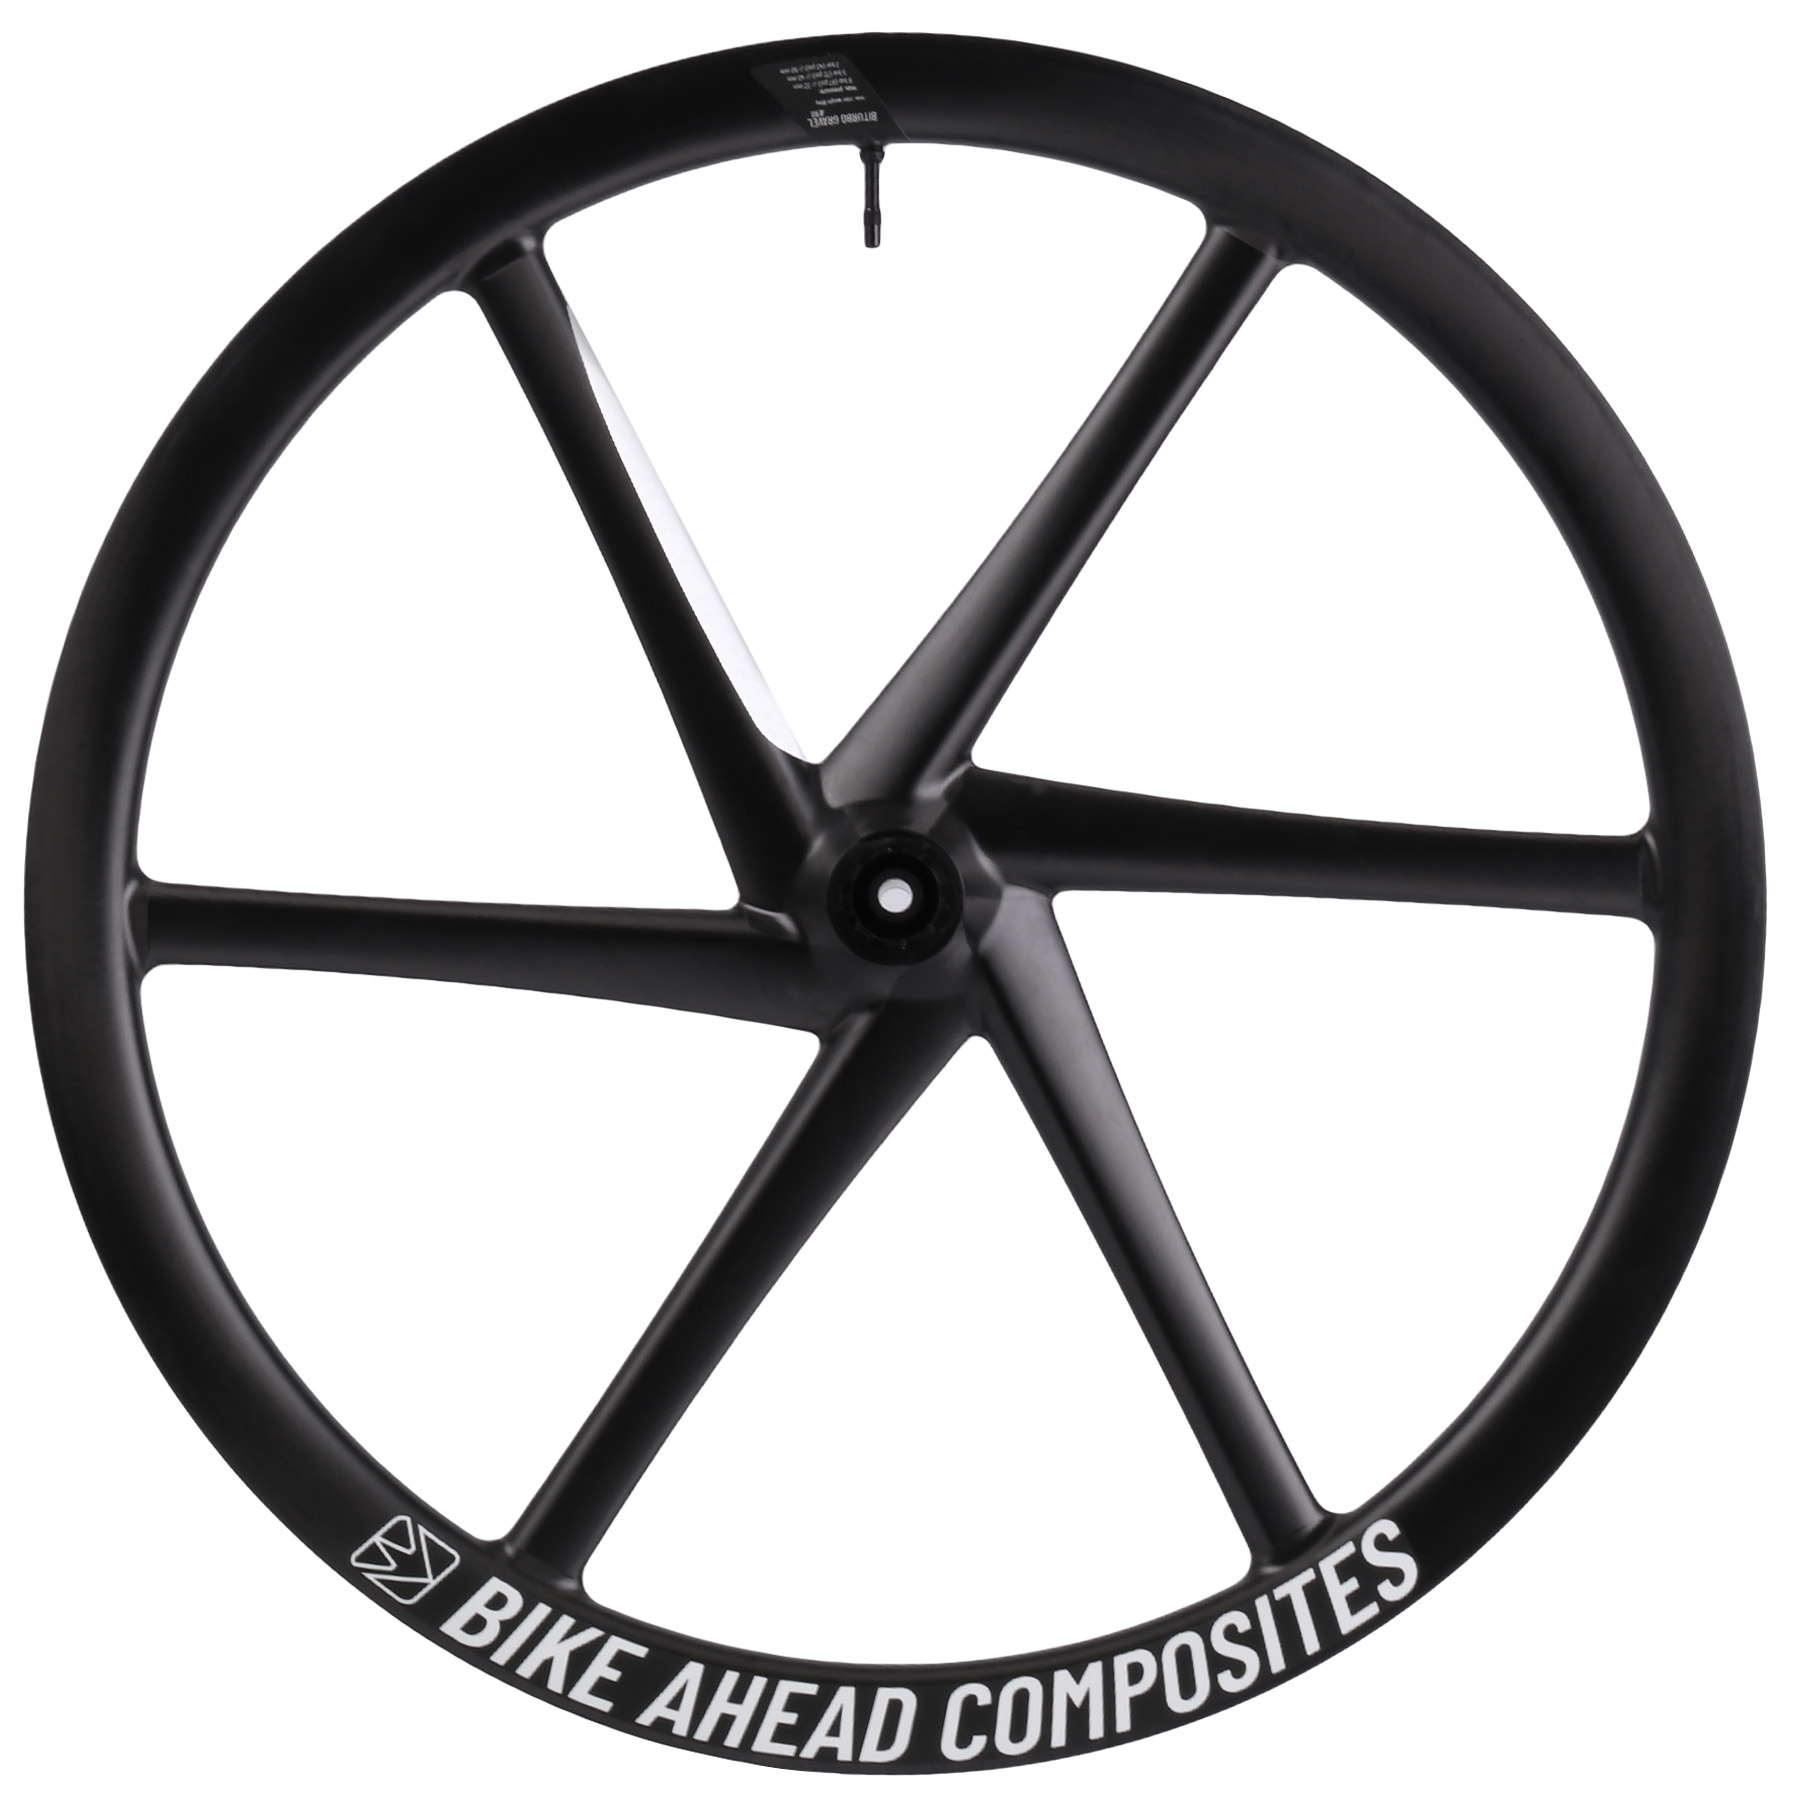 Picture of bike ahead composites BITURBO GRAVEL AERO Carbon Rear Wheel - Centerlock - 12x142mm - SRAM XDR